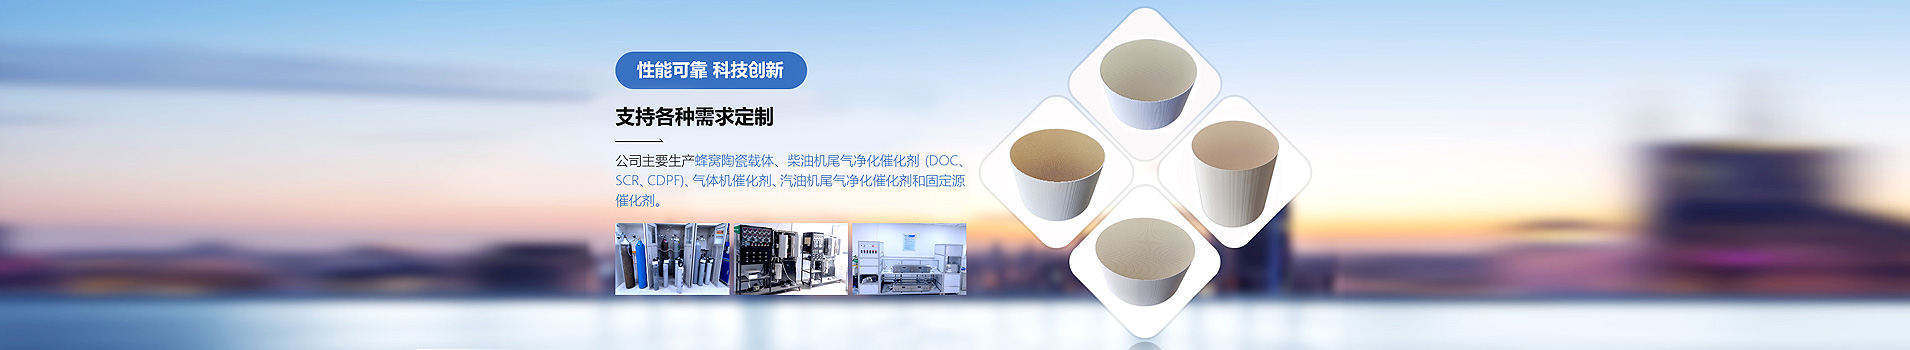 Kailong Lanfeng new material Technology Co., LTD